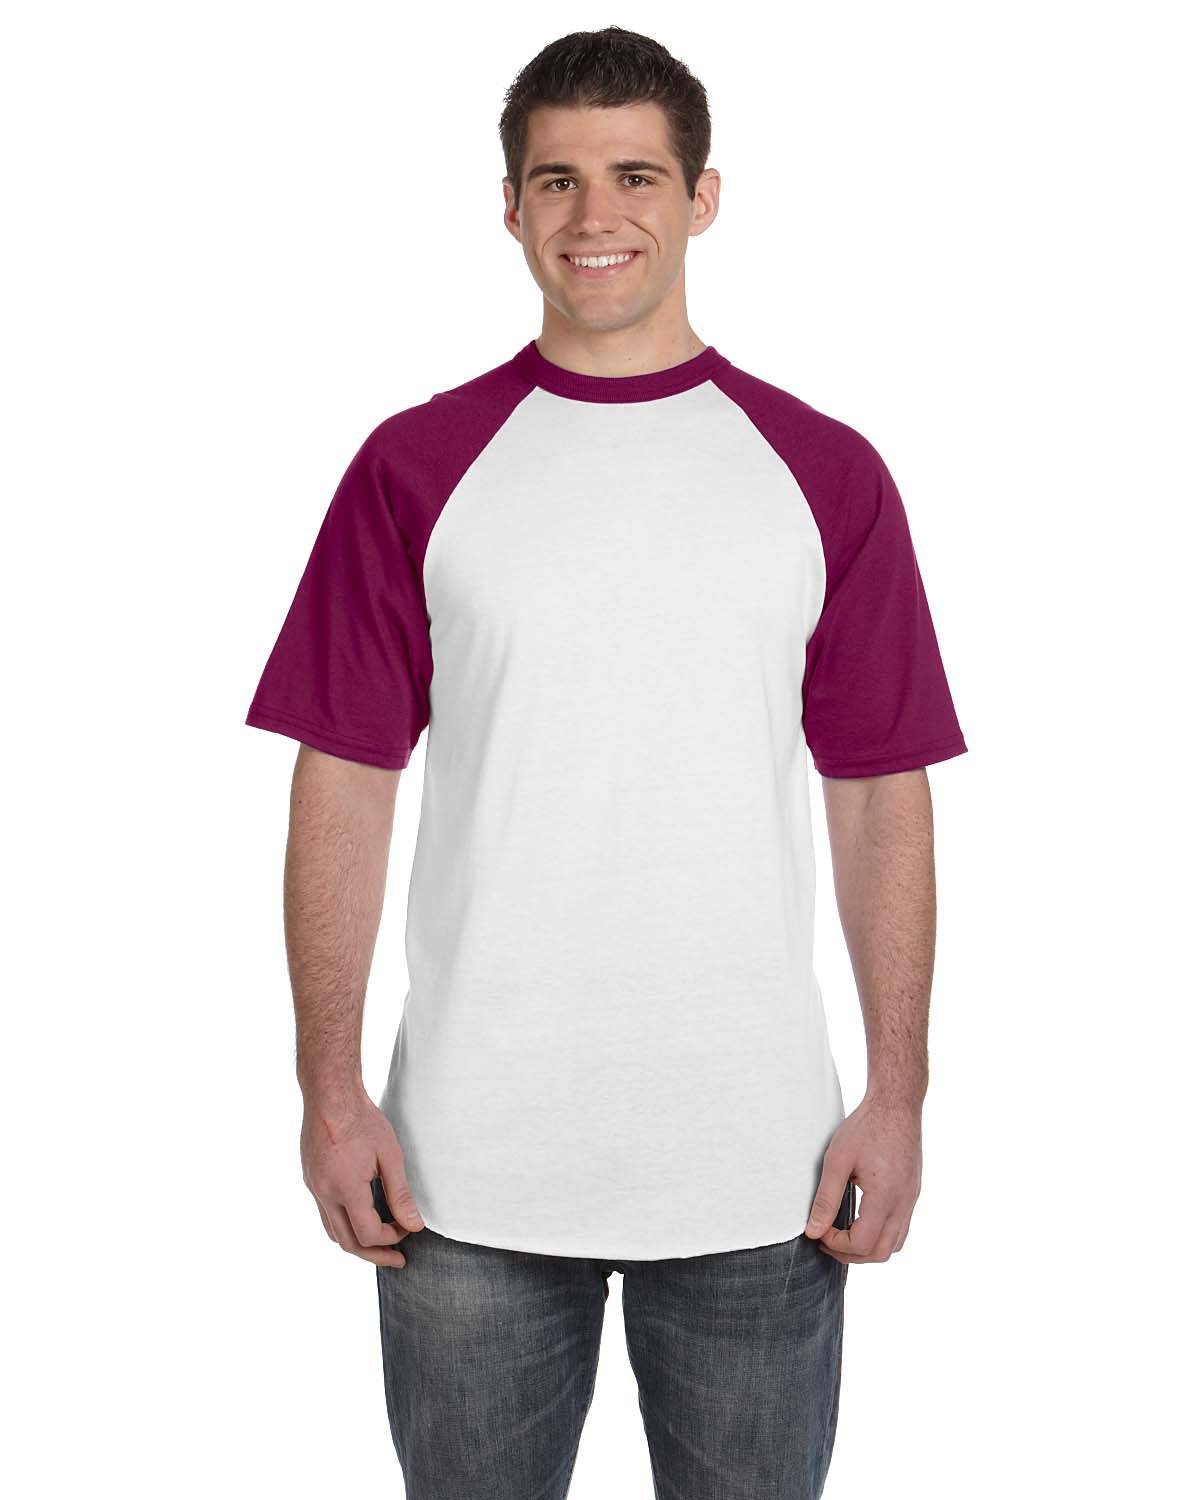 Augusta Sportswear Adult Short-Sleeve Baseball Jersey WHITE/ MAROON 